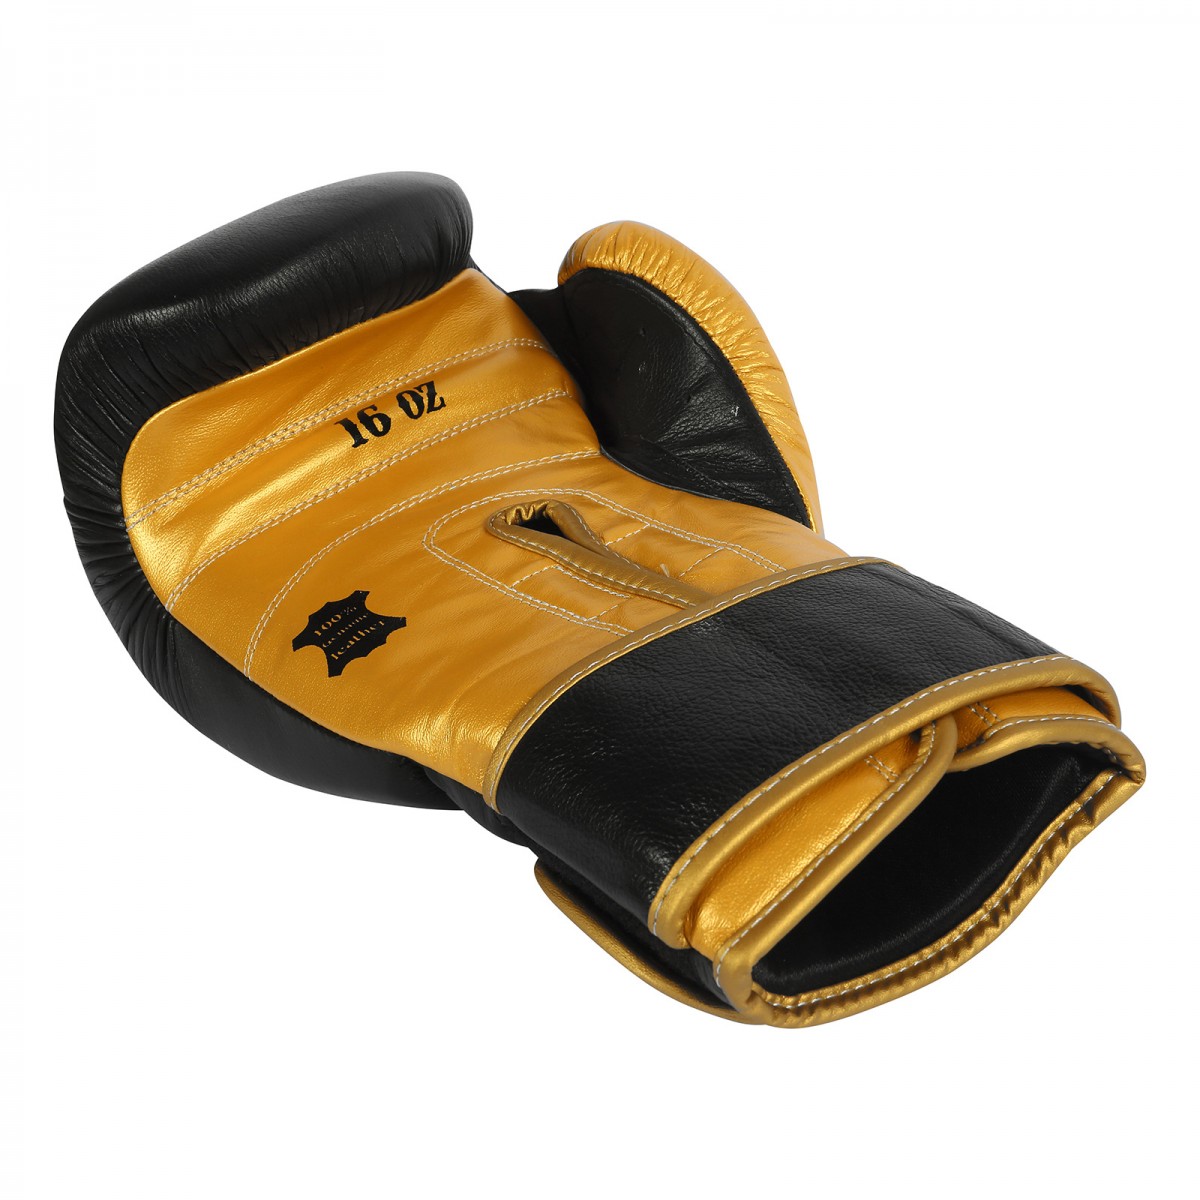 Dynamite Kickboxing Boxing Gloves - Genuine Leather 16 OZ